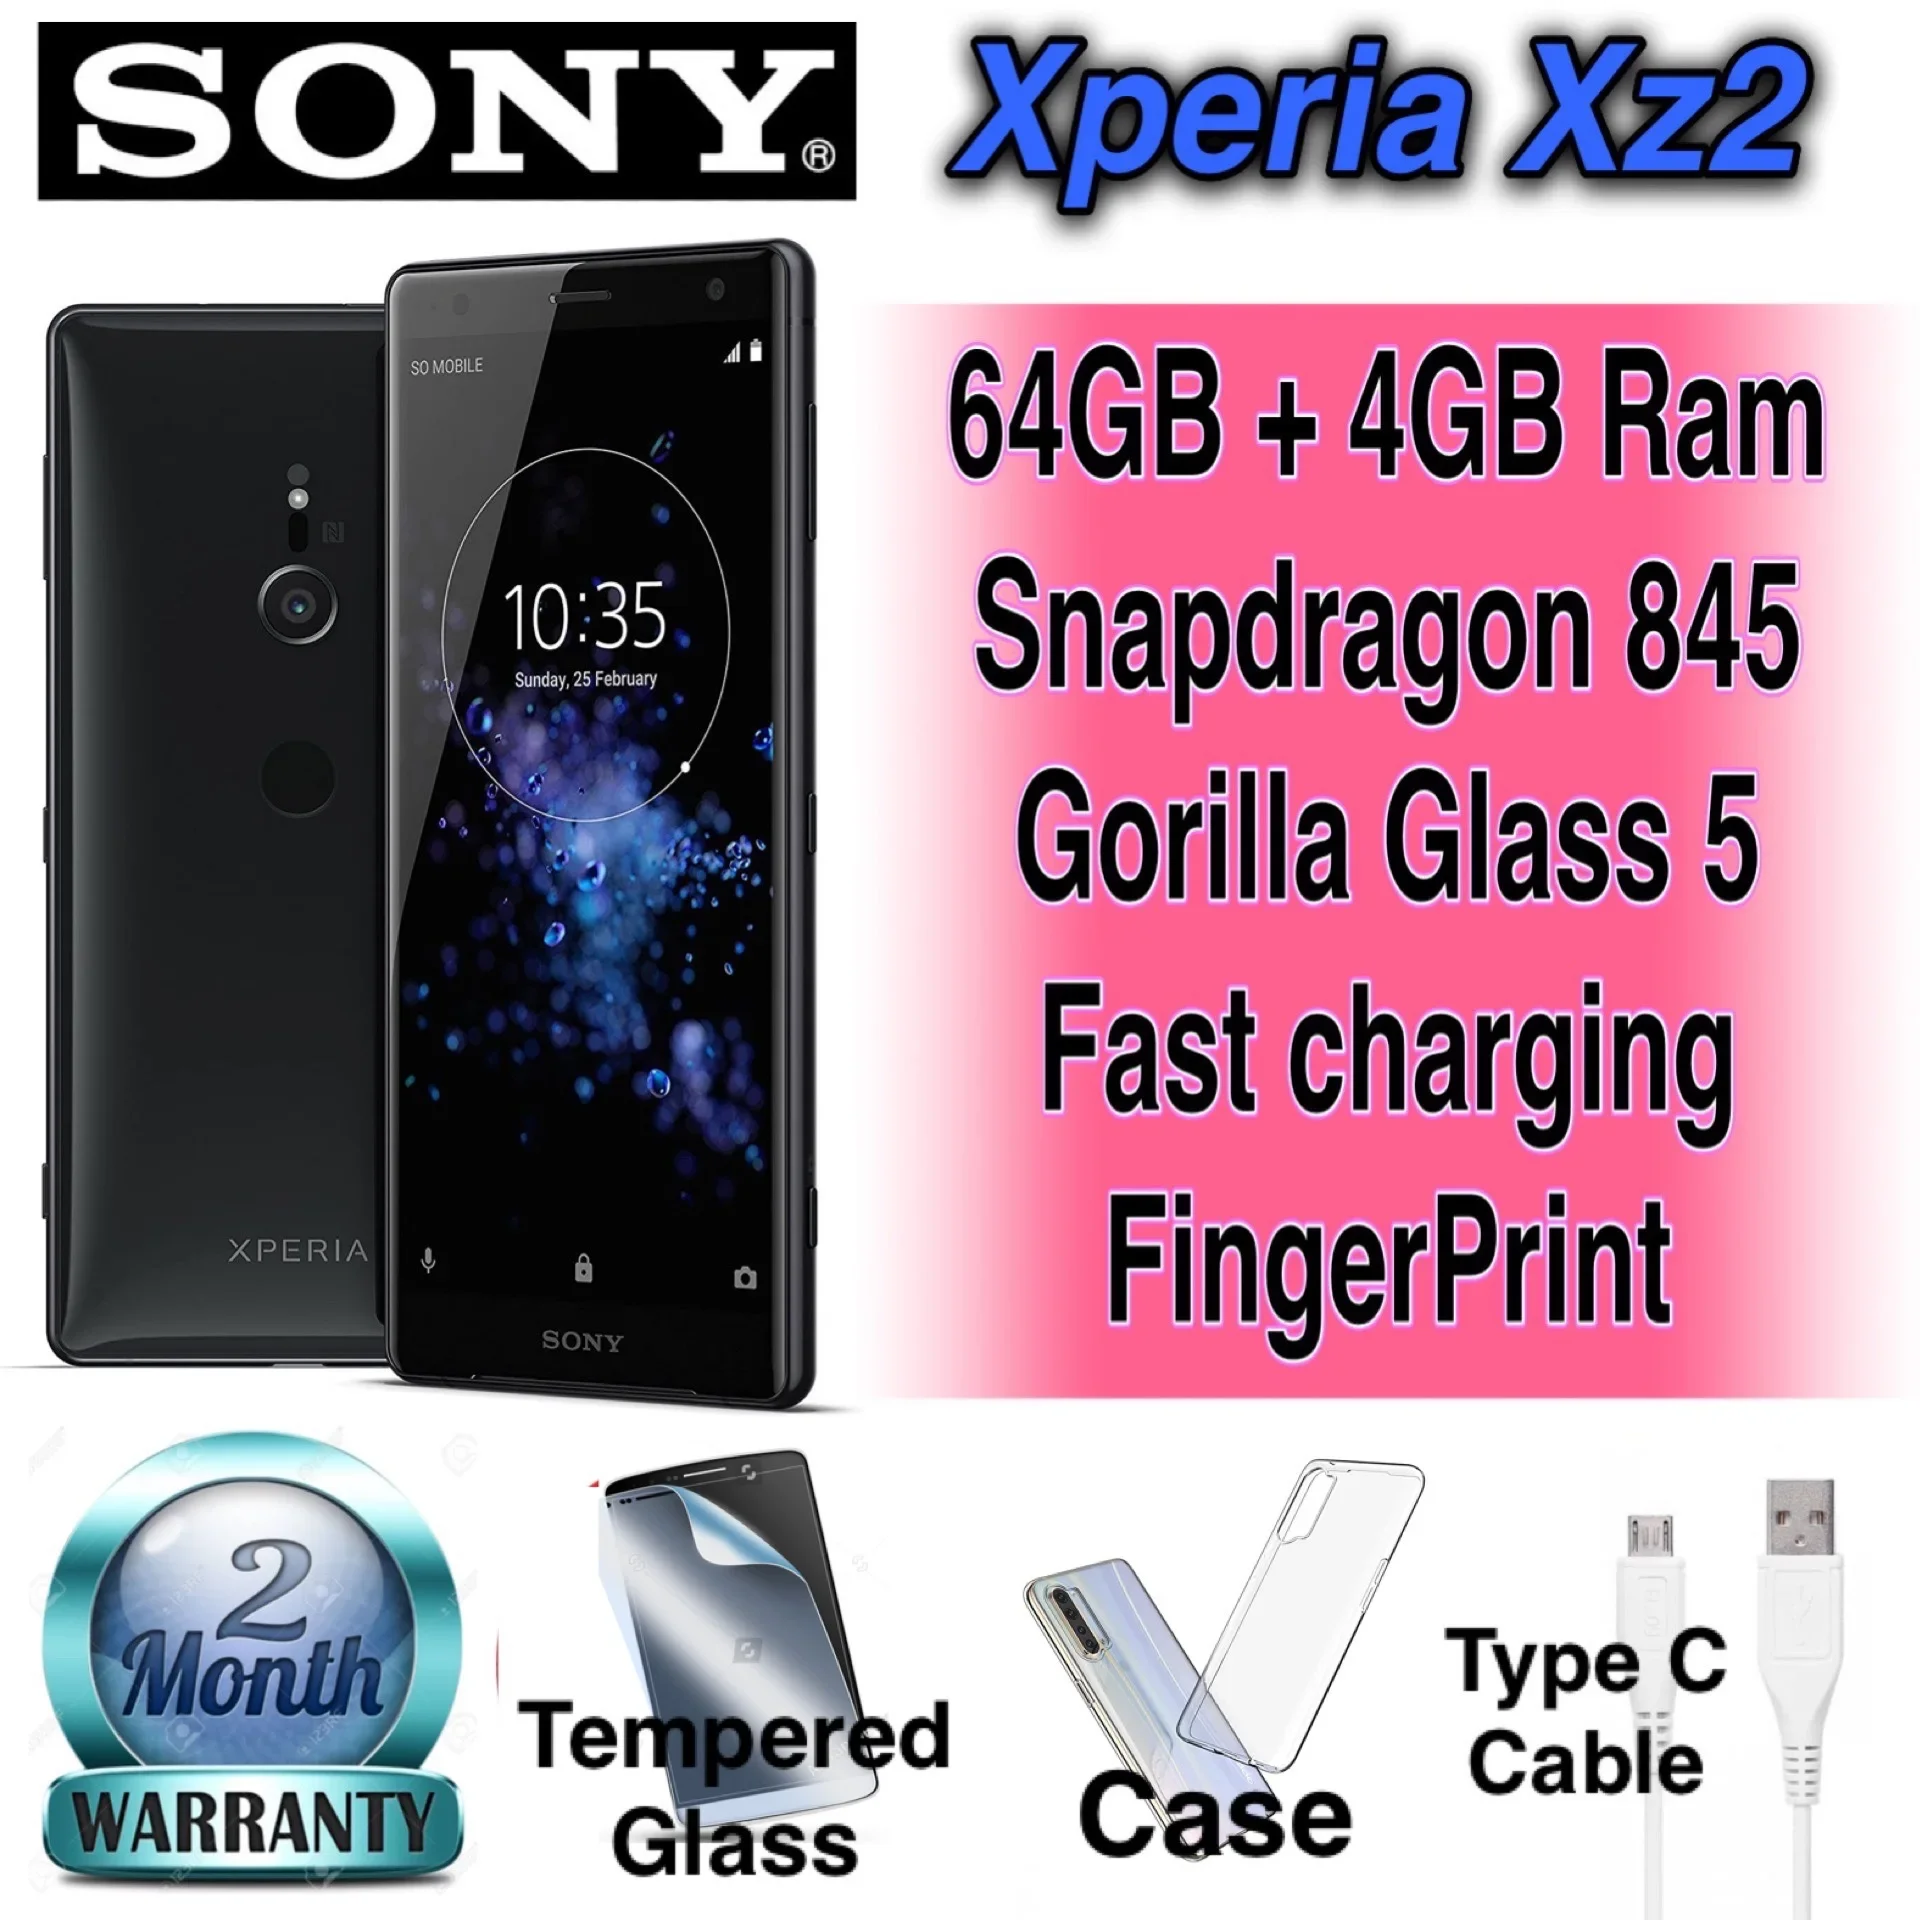 100% Original - Sony Xperia XZ2 (snapdragon 845) 64GB+4GB Ram (Tip Top Condition) 2nd